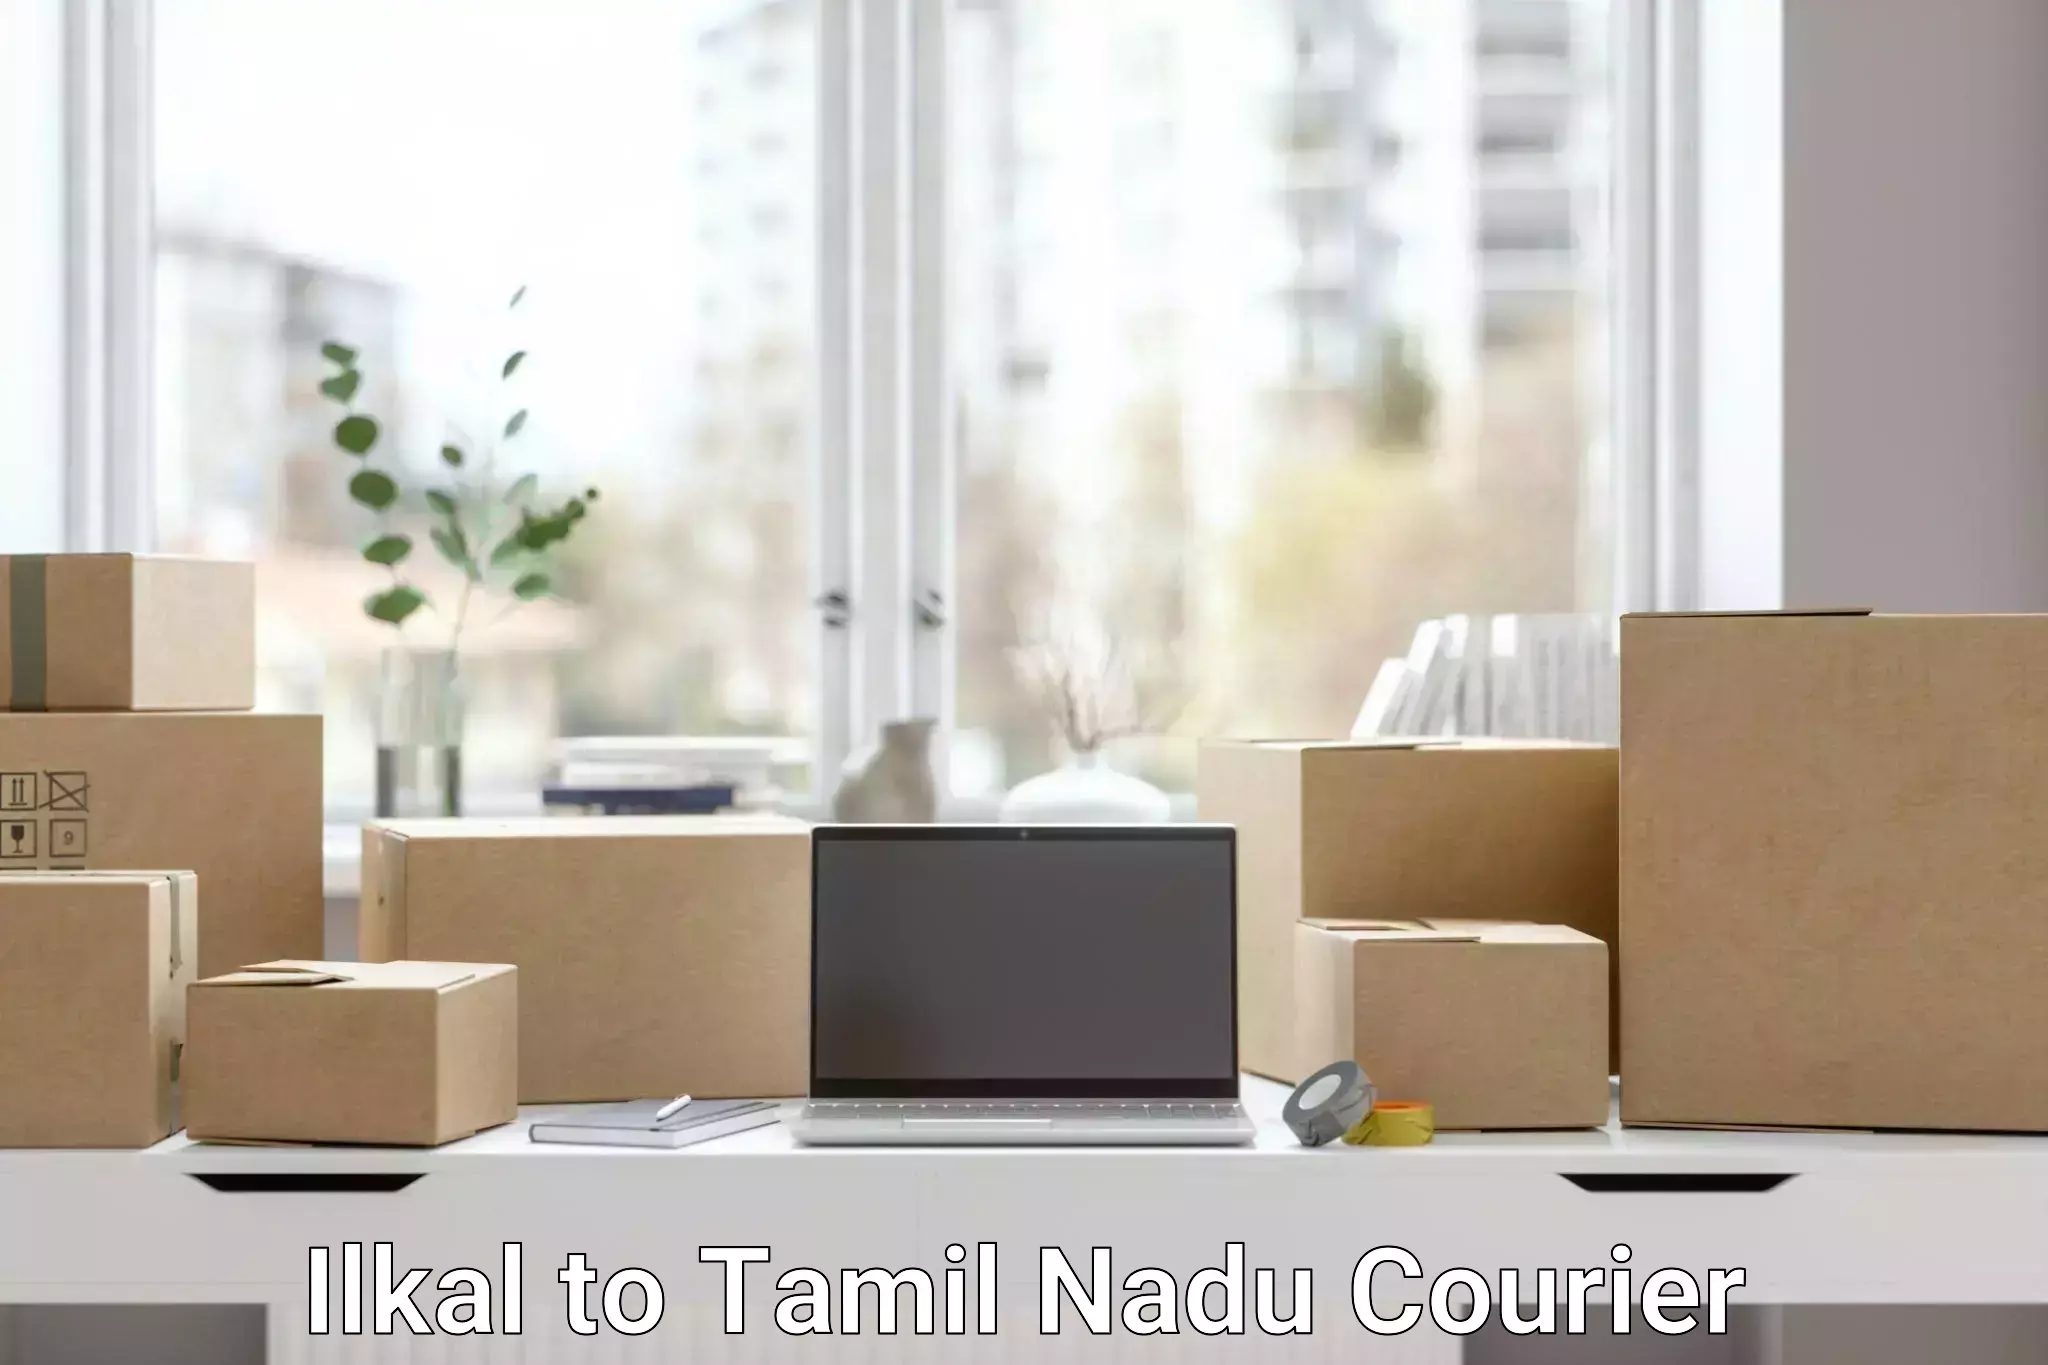 Courier service efficiency Ilkal to Tamil Nadu